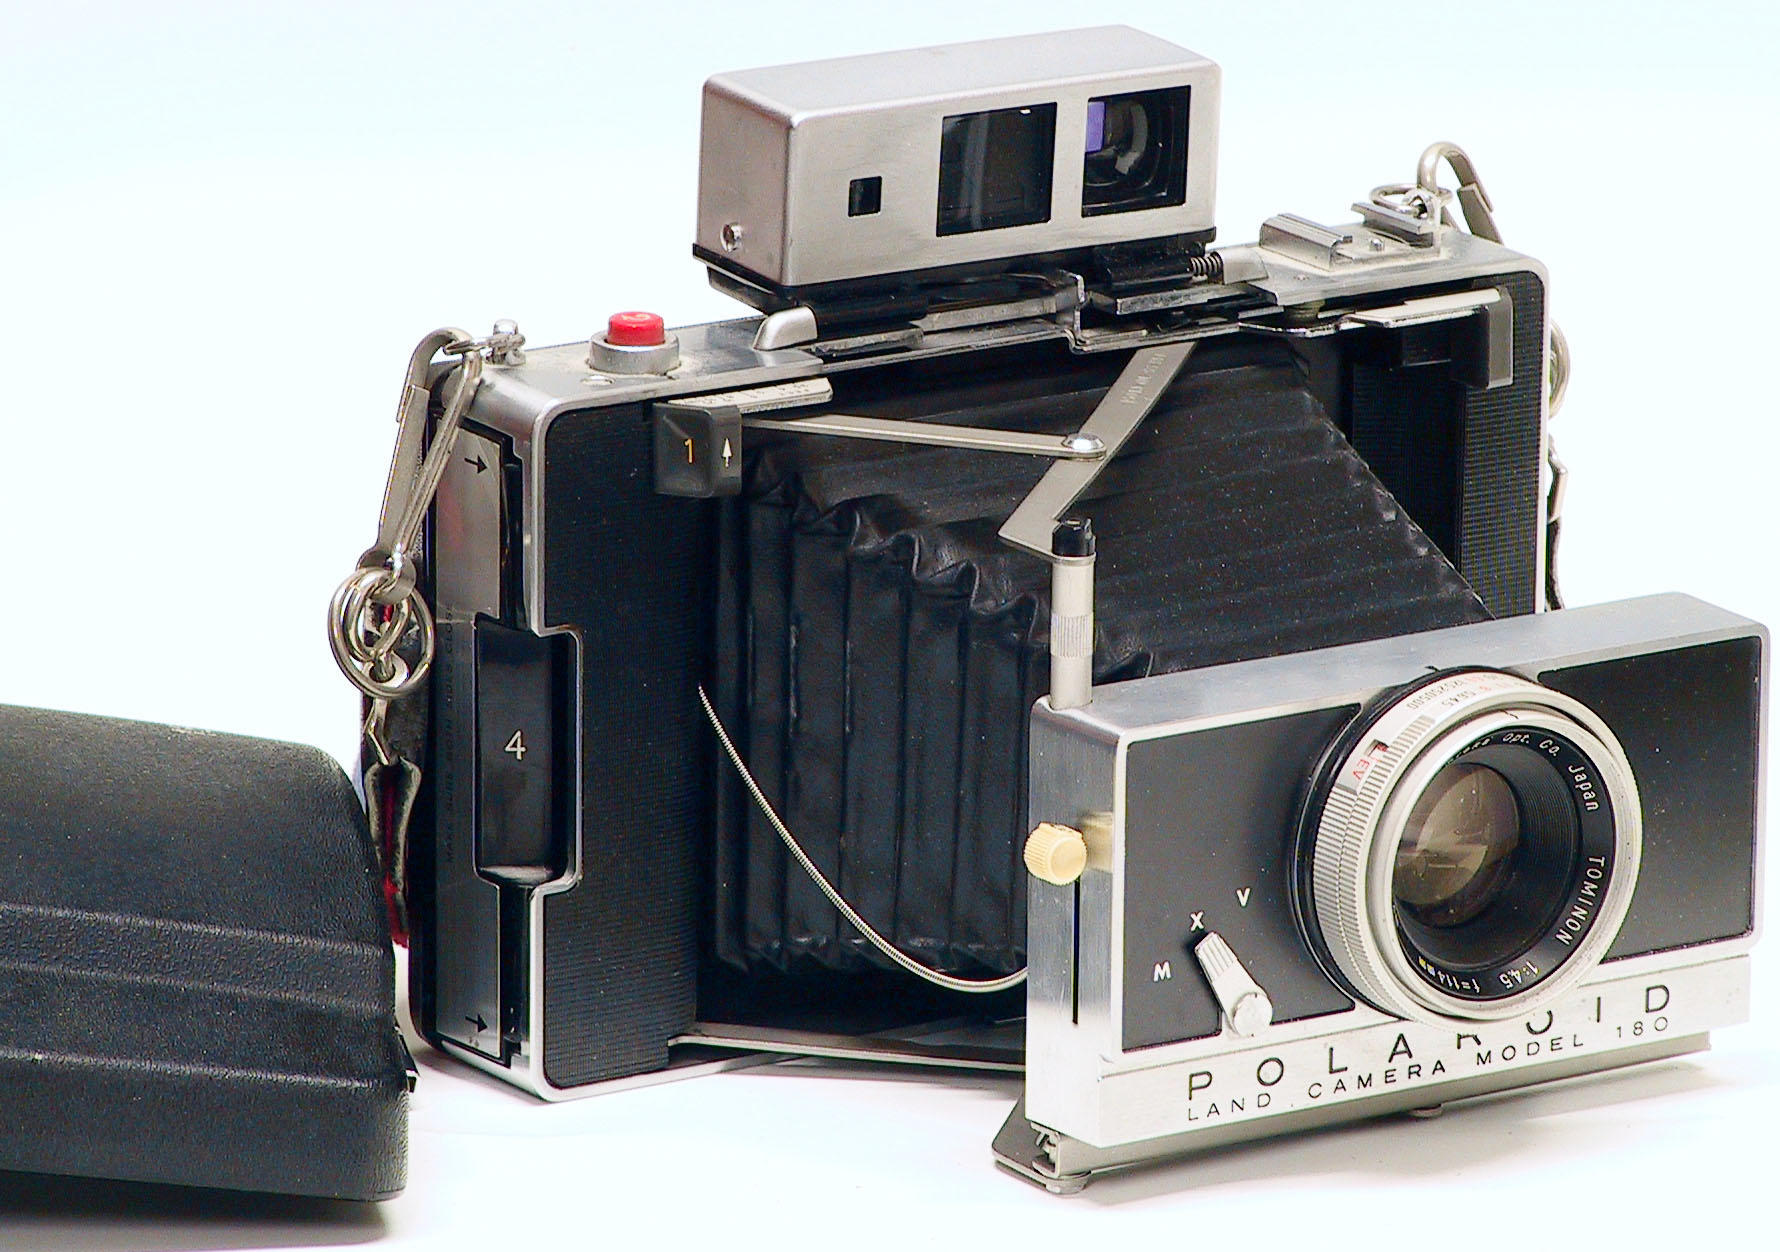 Stoutmoedig Bloedbad Tot Polaroid Model 180 camera, - auctions & price archive